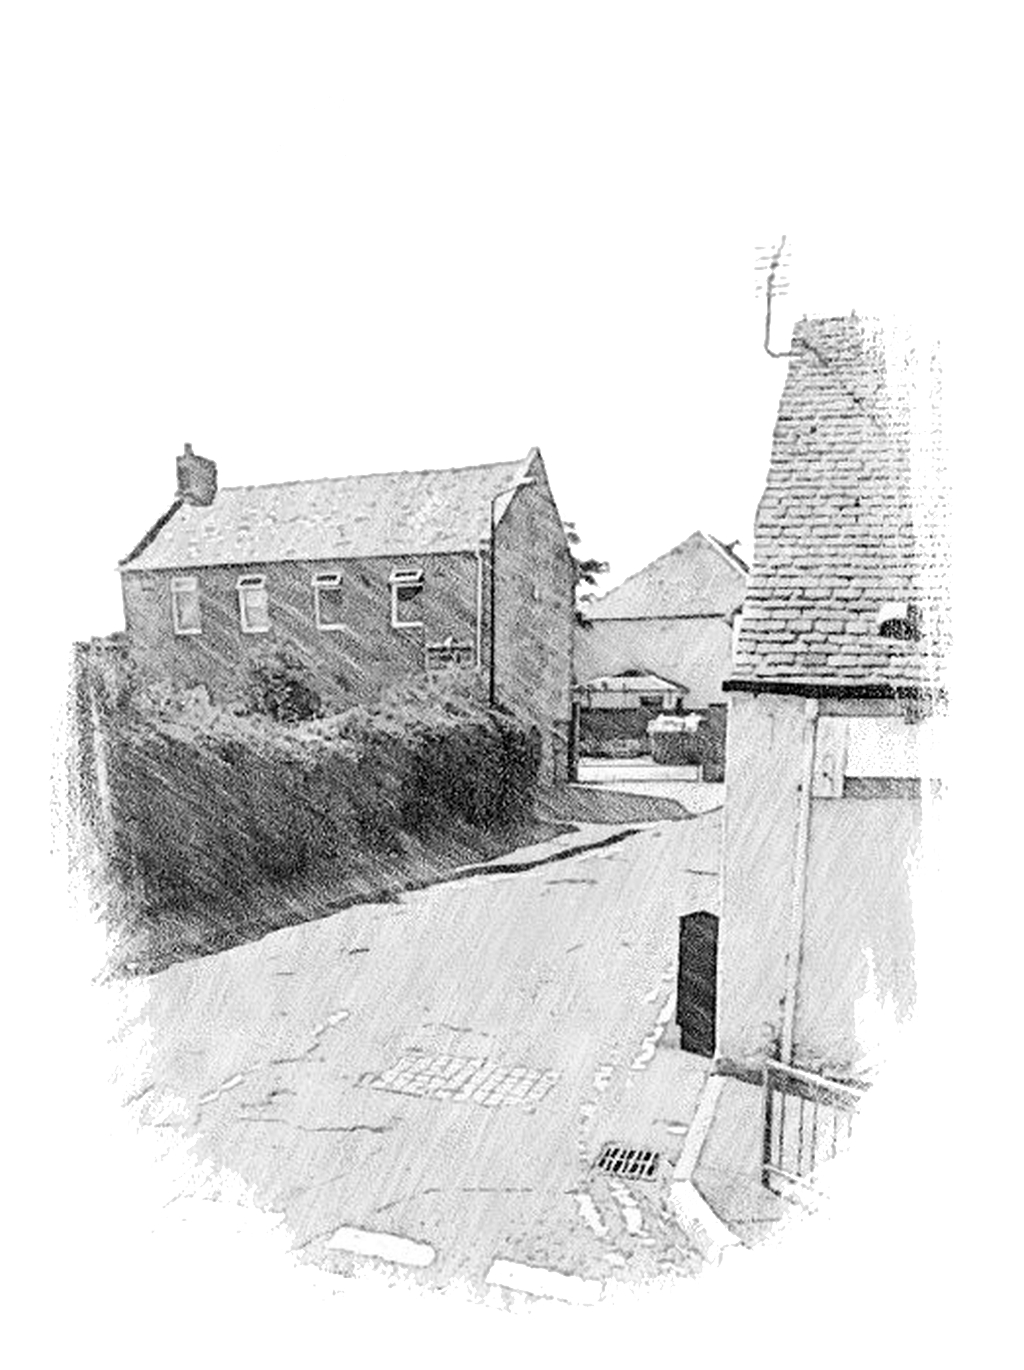 Park Road - Composed by John C Grant (https://johncgrant.com). Traditional composer from Kilmarnock, Ayrshire, Scotland.